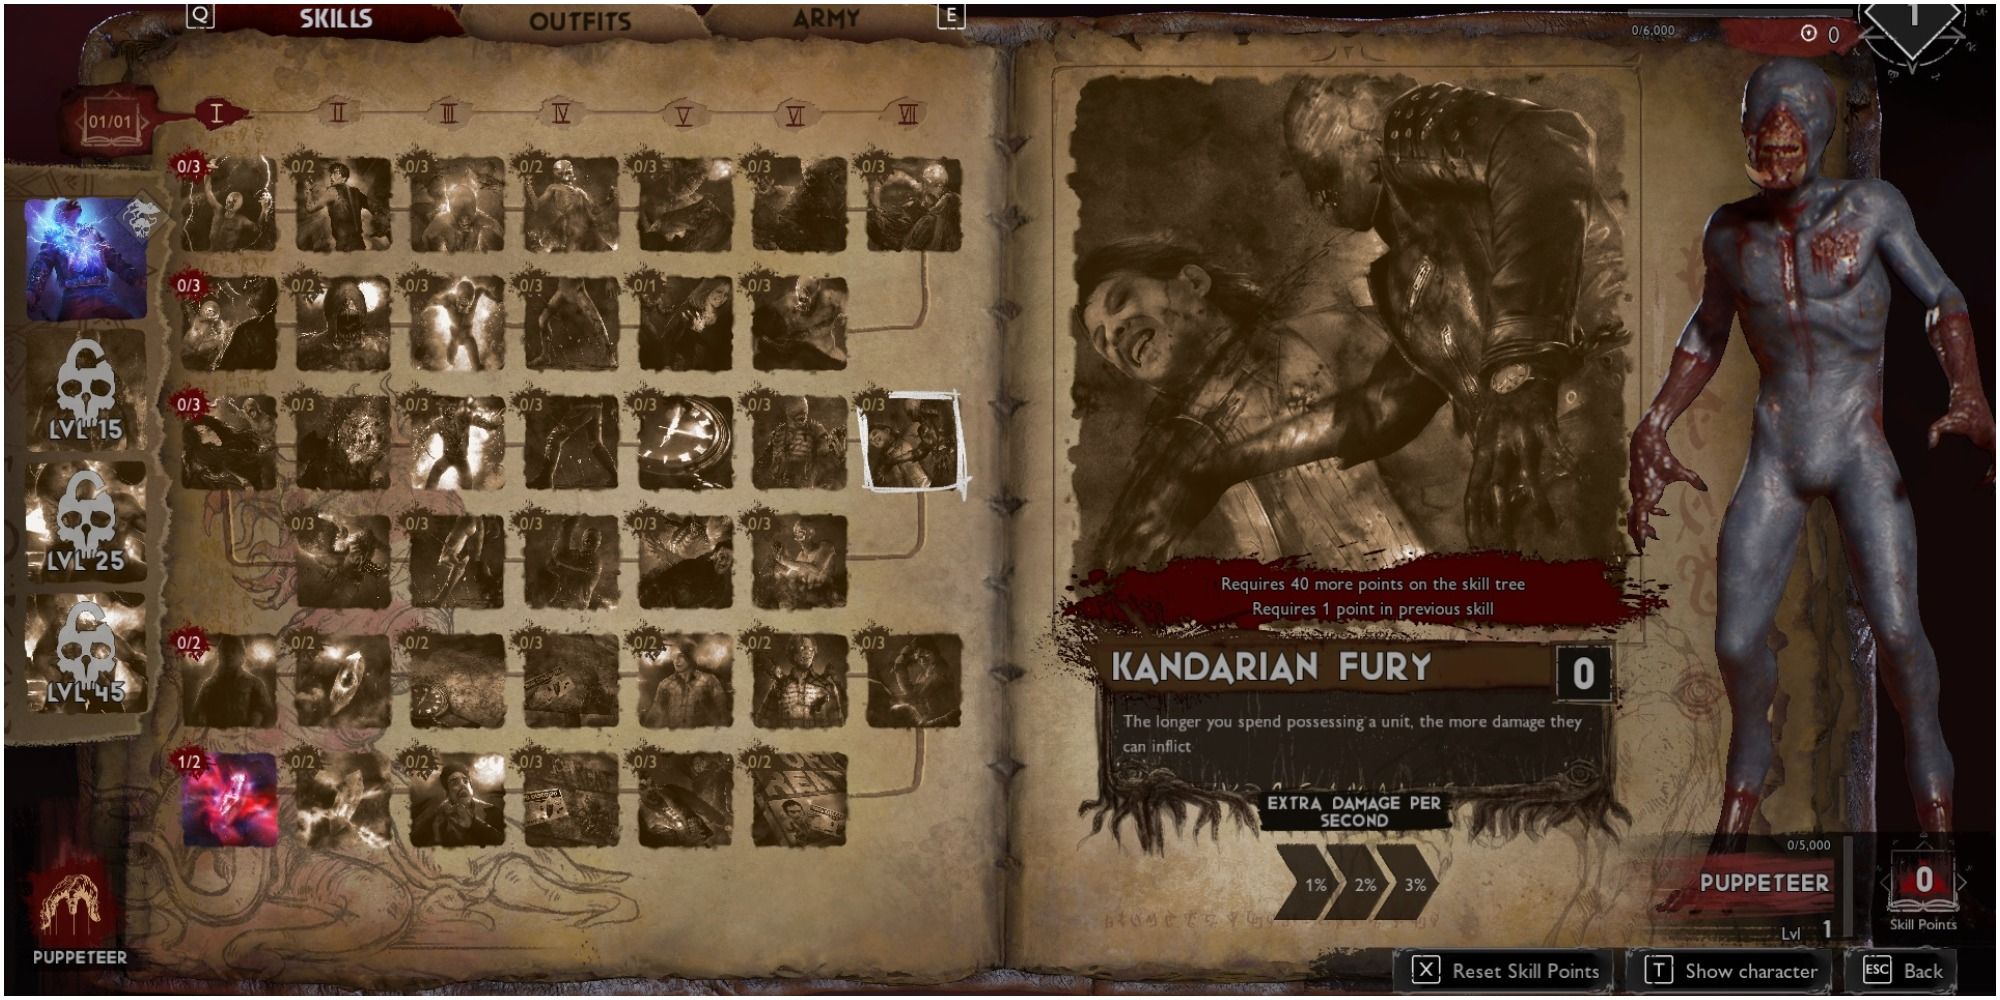 Evil Dead The Game Puppeteer Skill Kandarian Fury Description